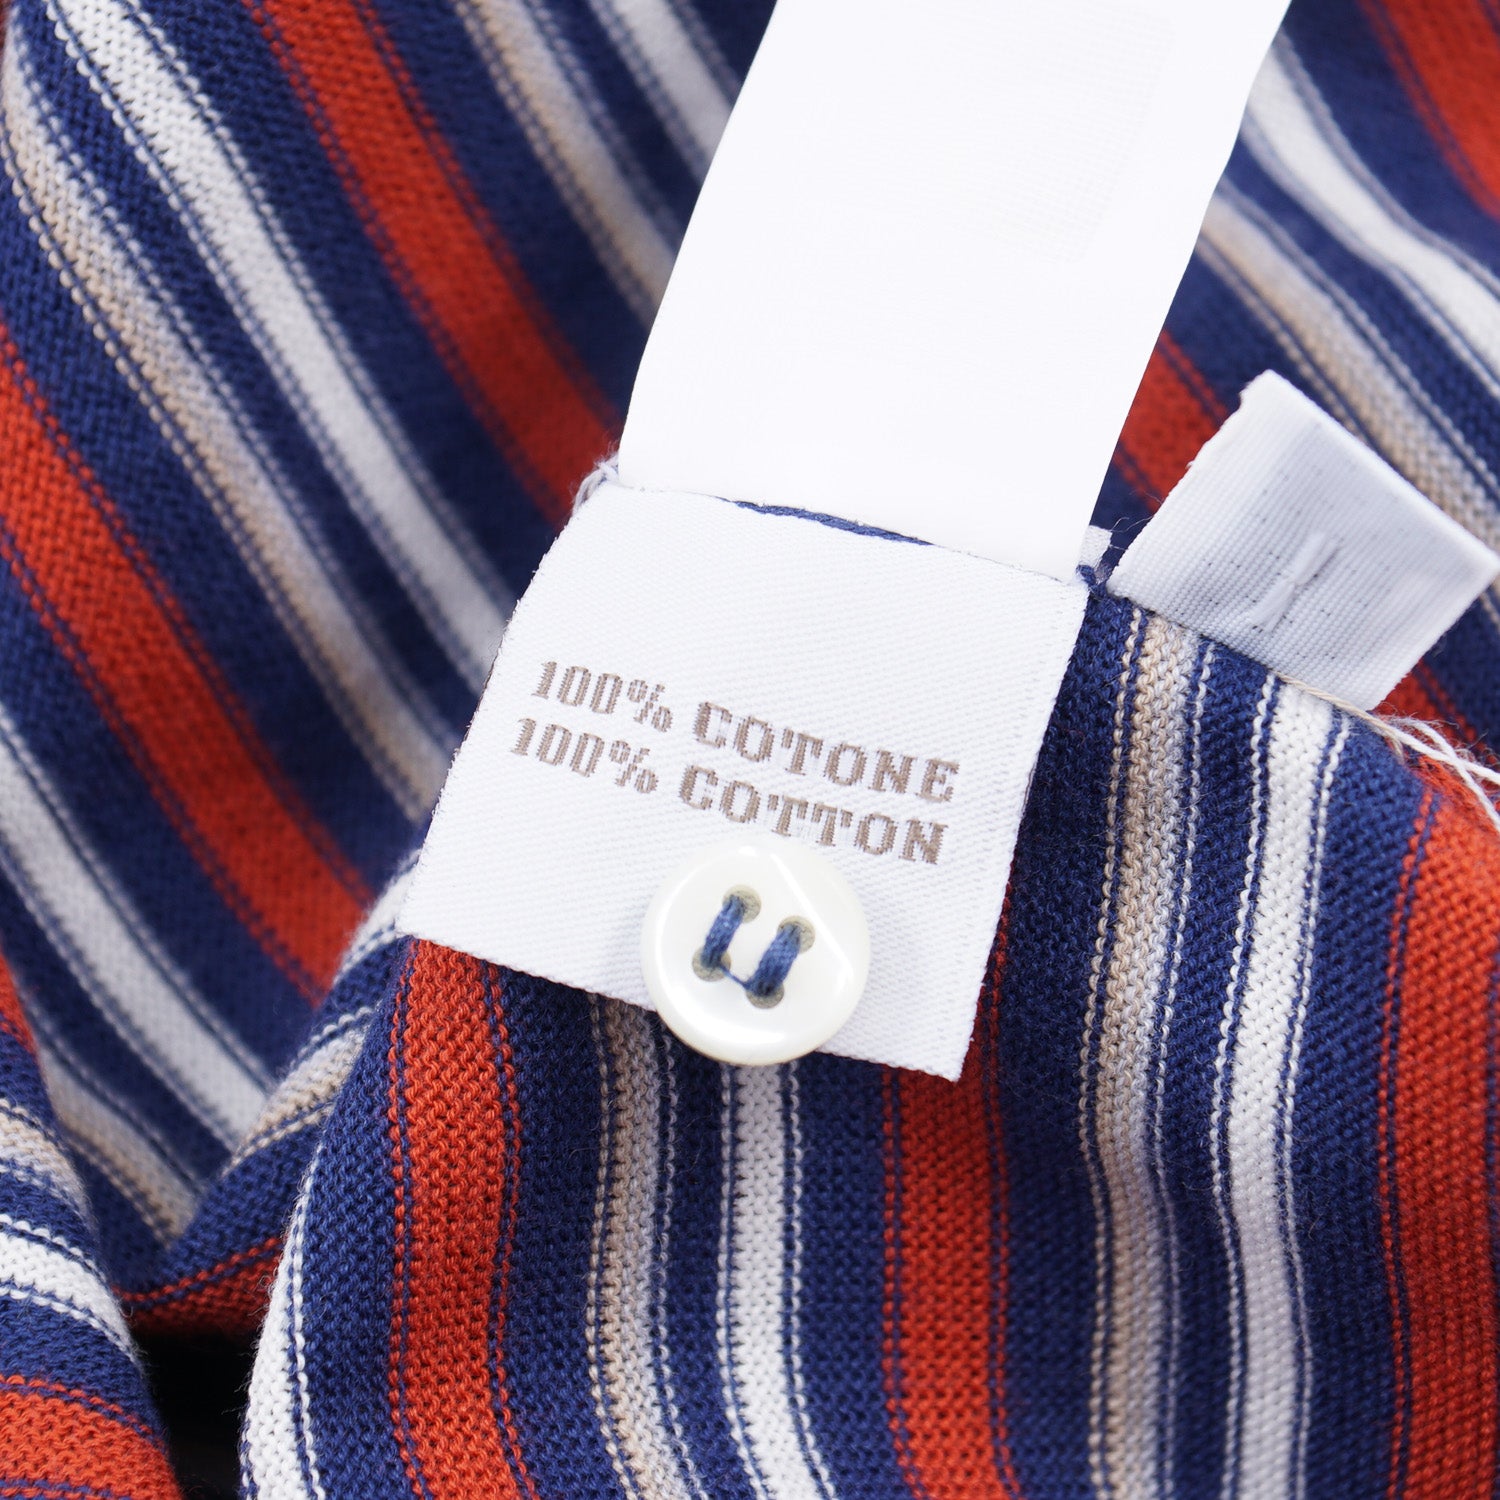 Luigi Borrelli Striped Cotton Polo Shirt - Top Shelf Apparel